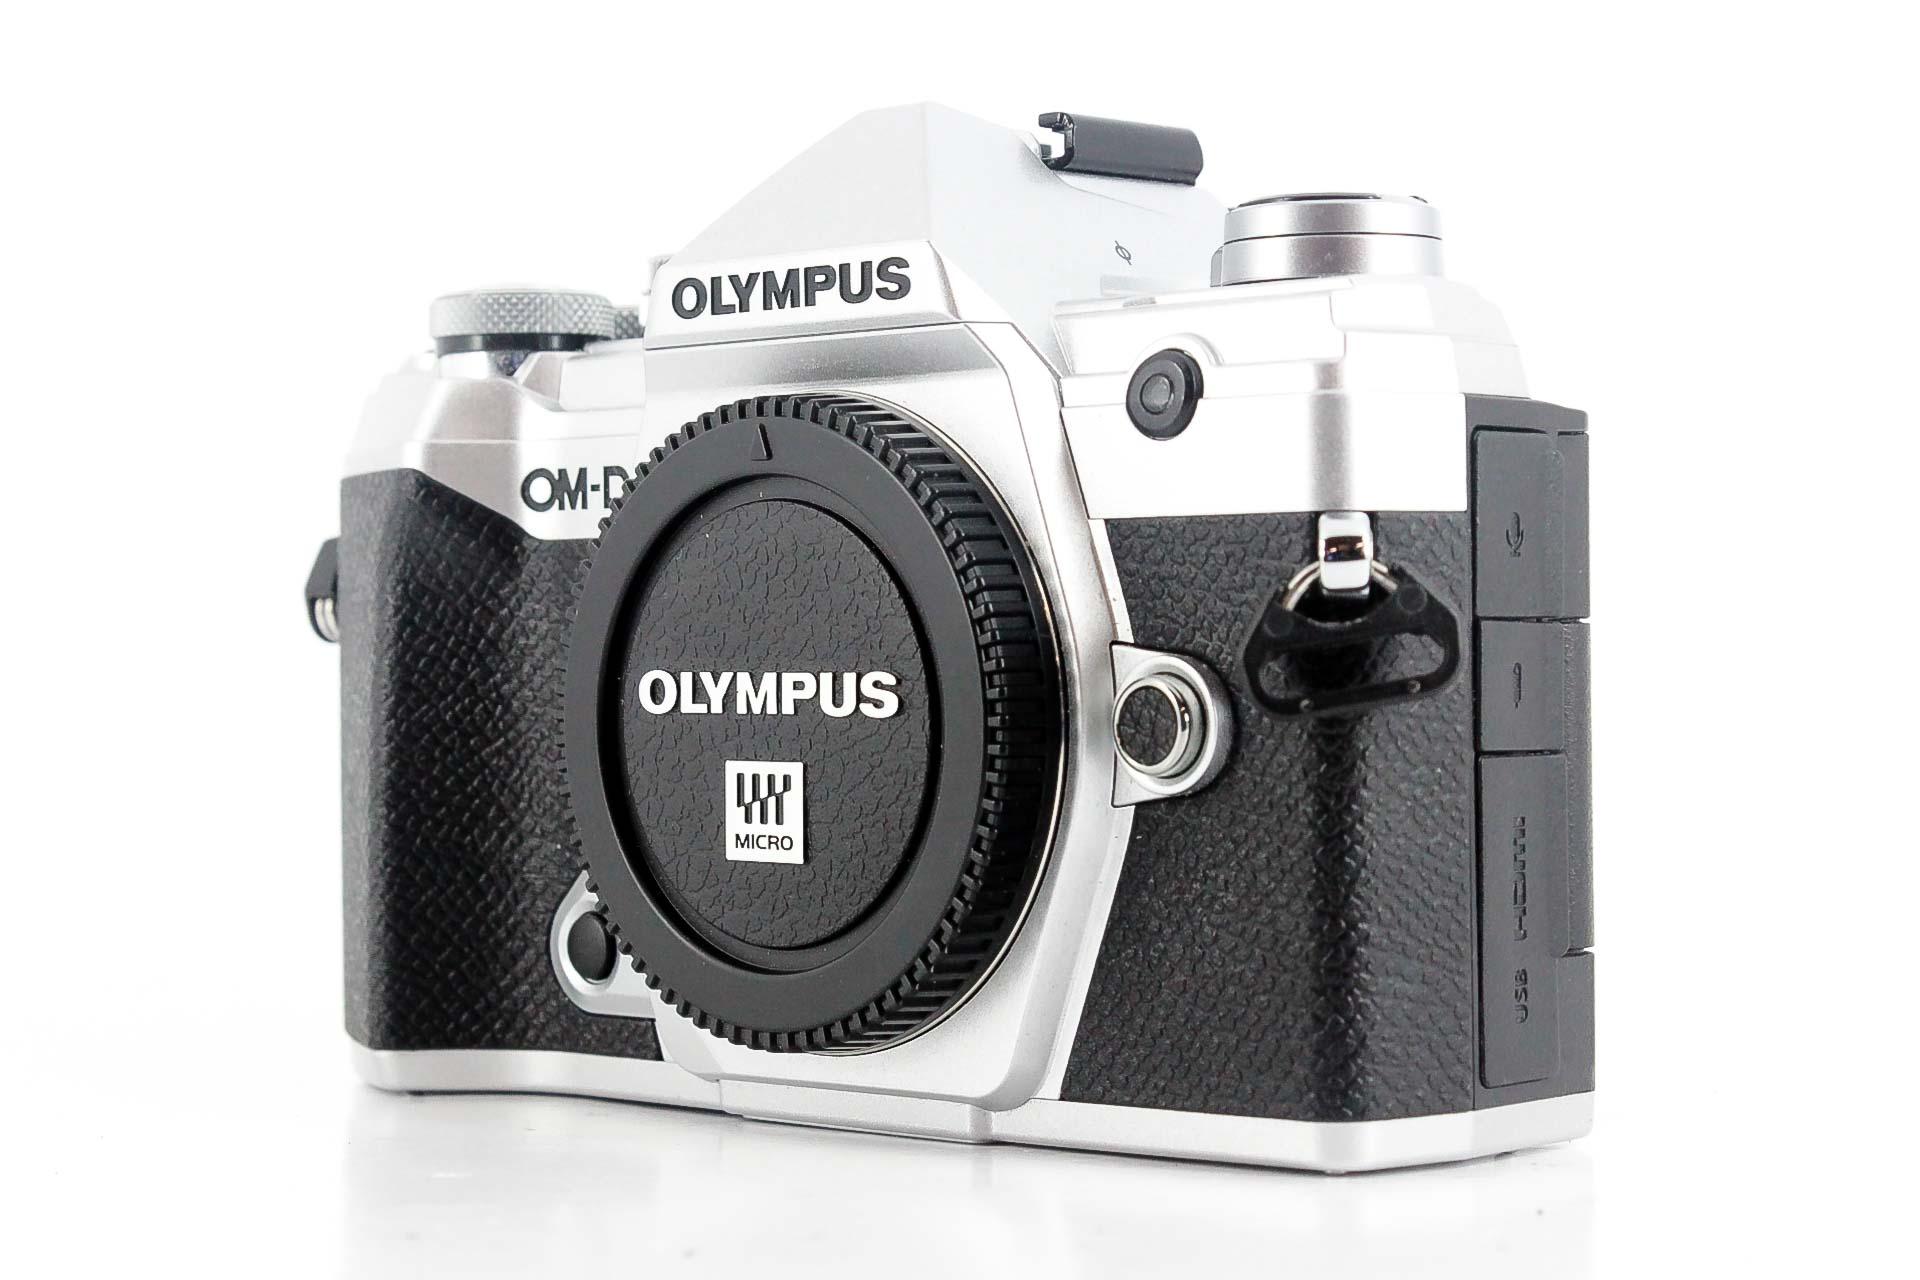 Olympus OM-D E-M5 Mark III Mirrorless Camera - Silver (Body Only)